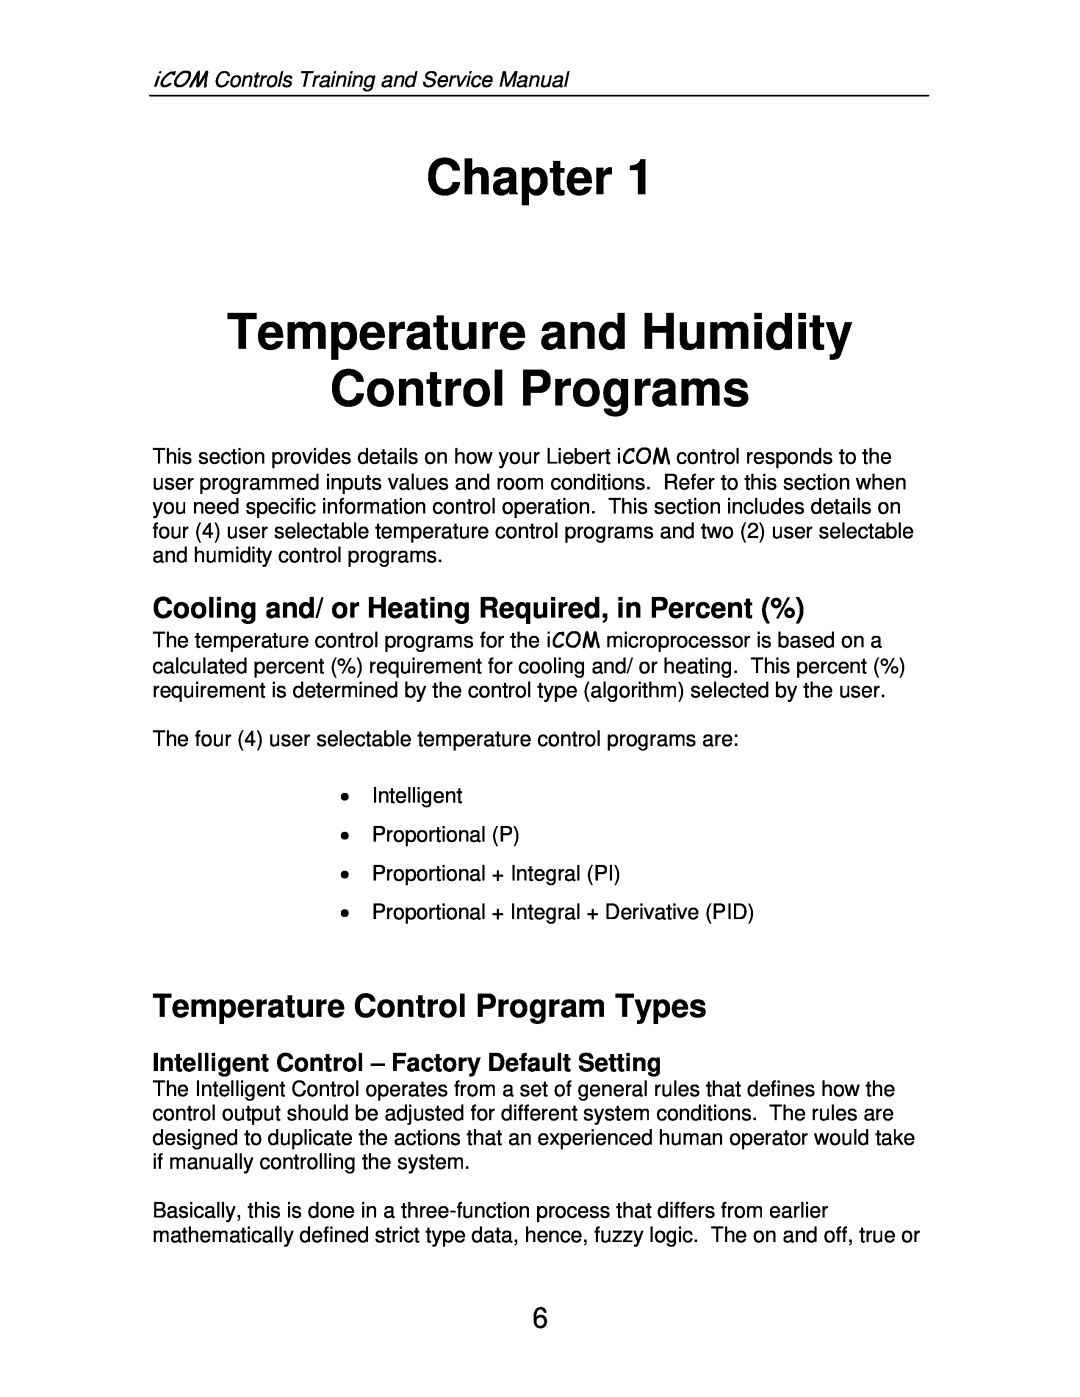 Liebert TM-10098 service manual Chapter Temperature and Humidity Control Programs, Temperature Control Program Types 